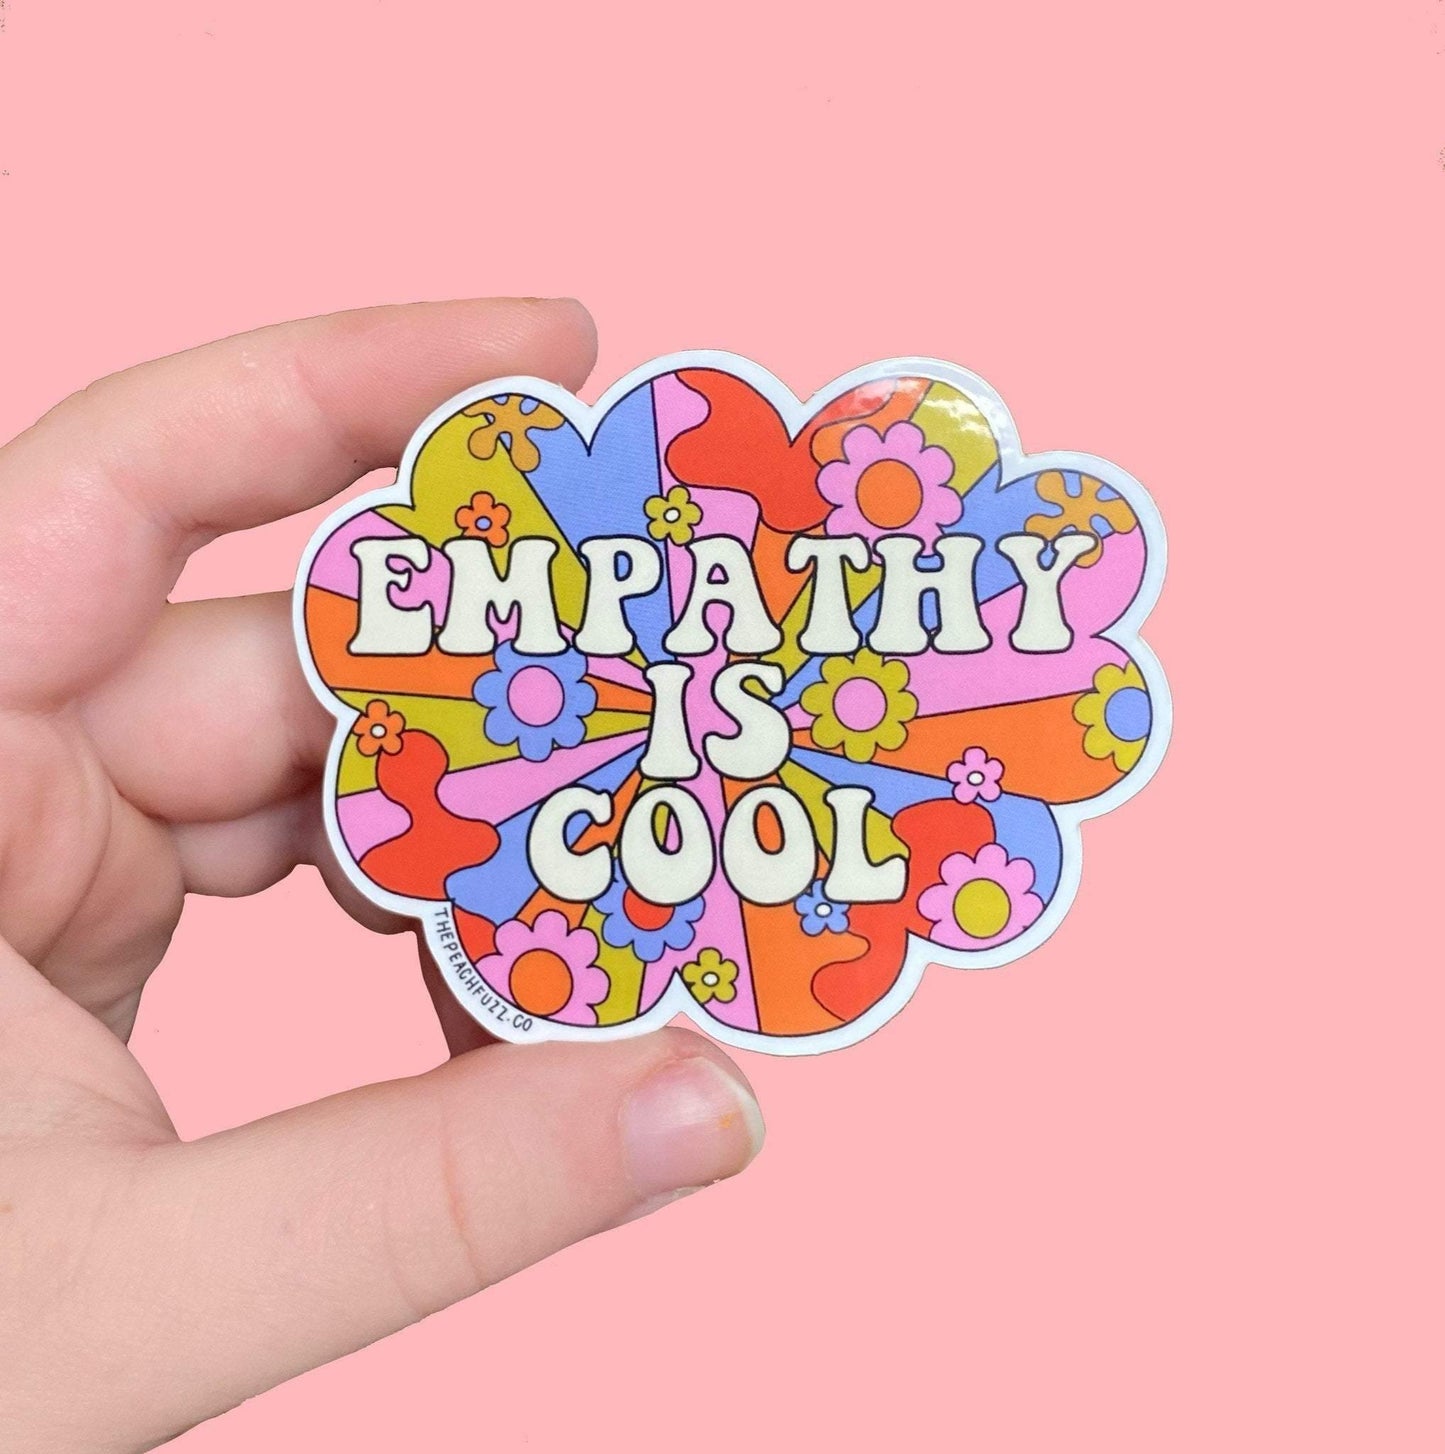 Empathy Is Cool Sticker - The Peach Fuzz